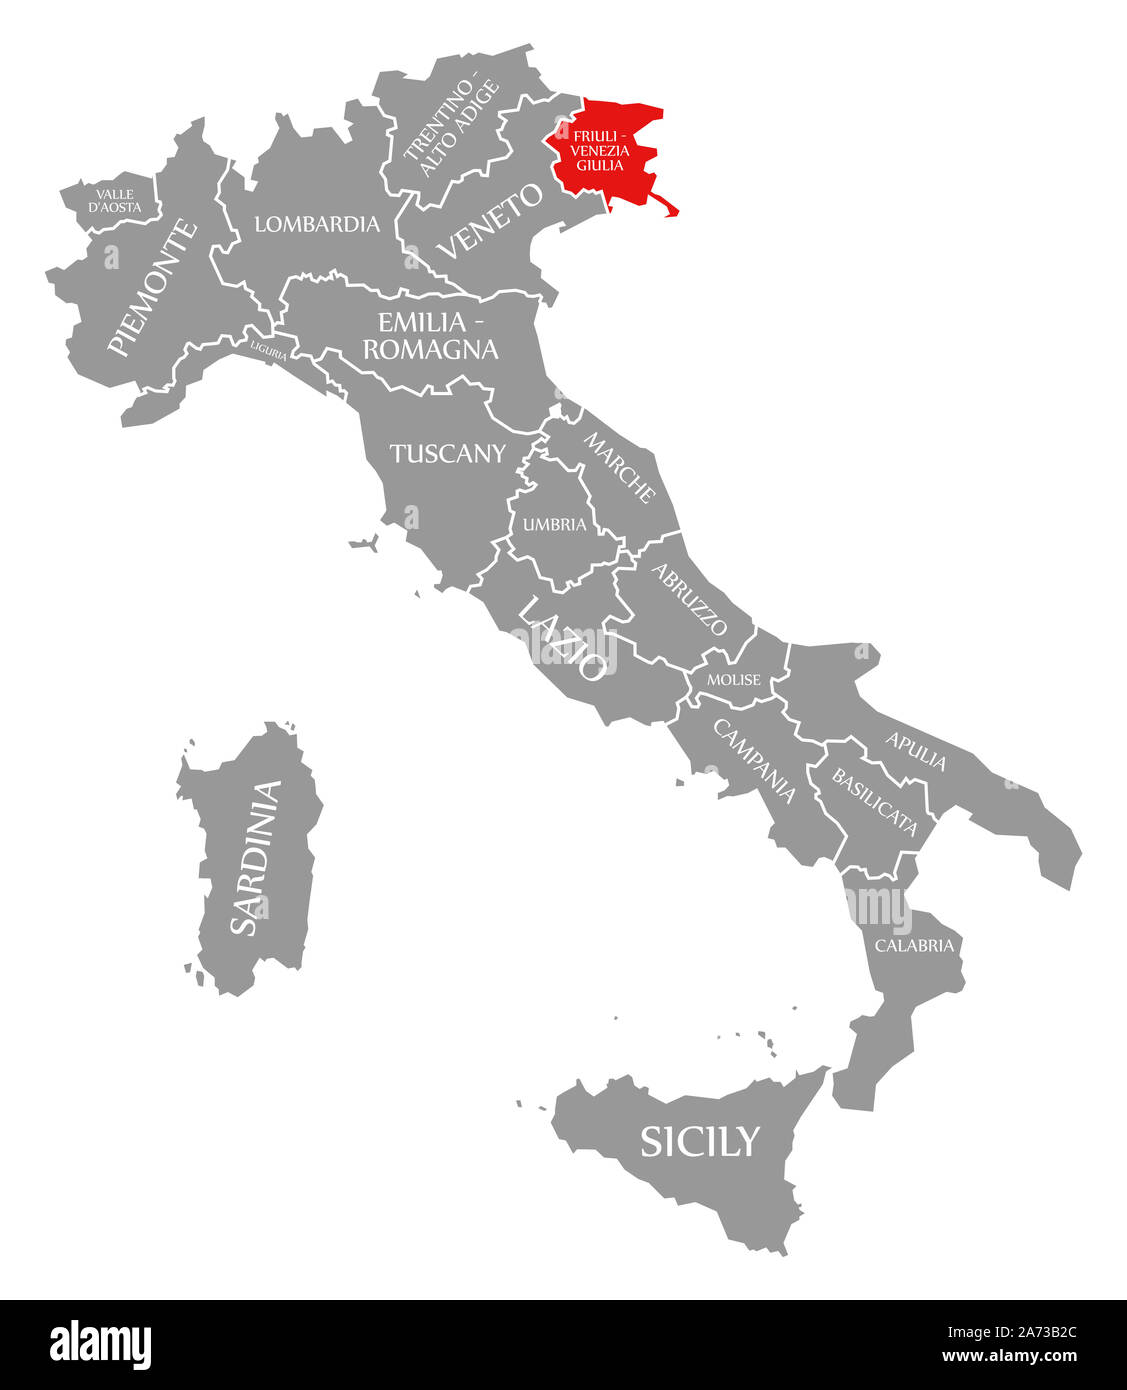 Friuli-Venezia Giulia red highlighted in map of Italy Stock Photo